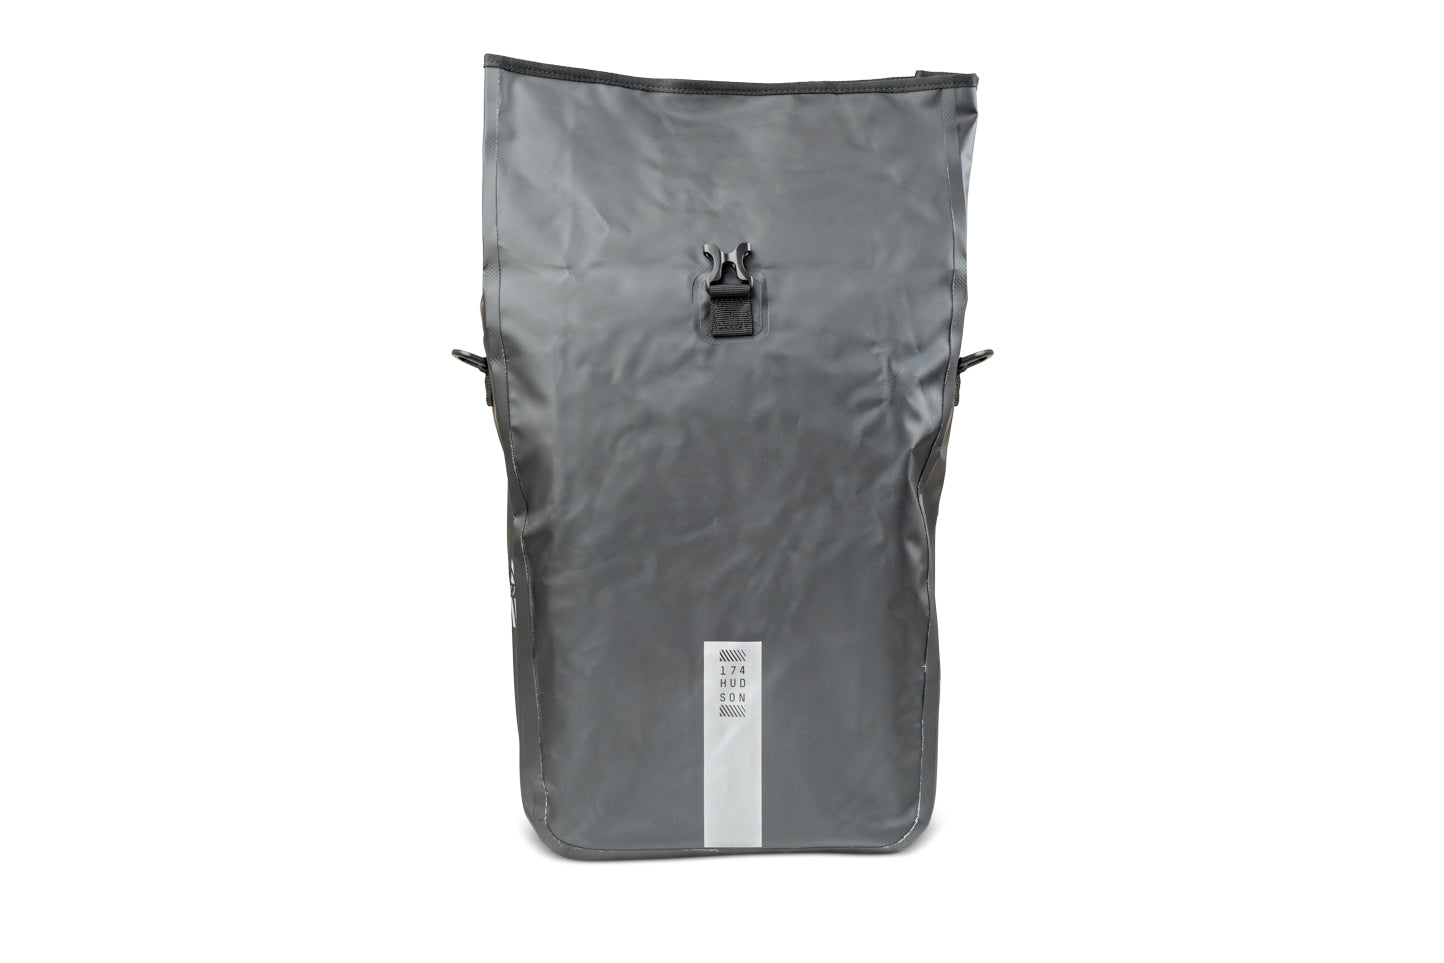 Waterproof nylon tarpaulin and fully taped seams on the Pannier Bag